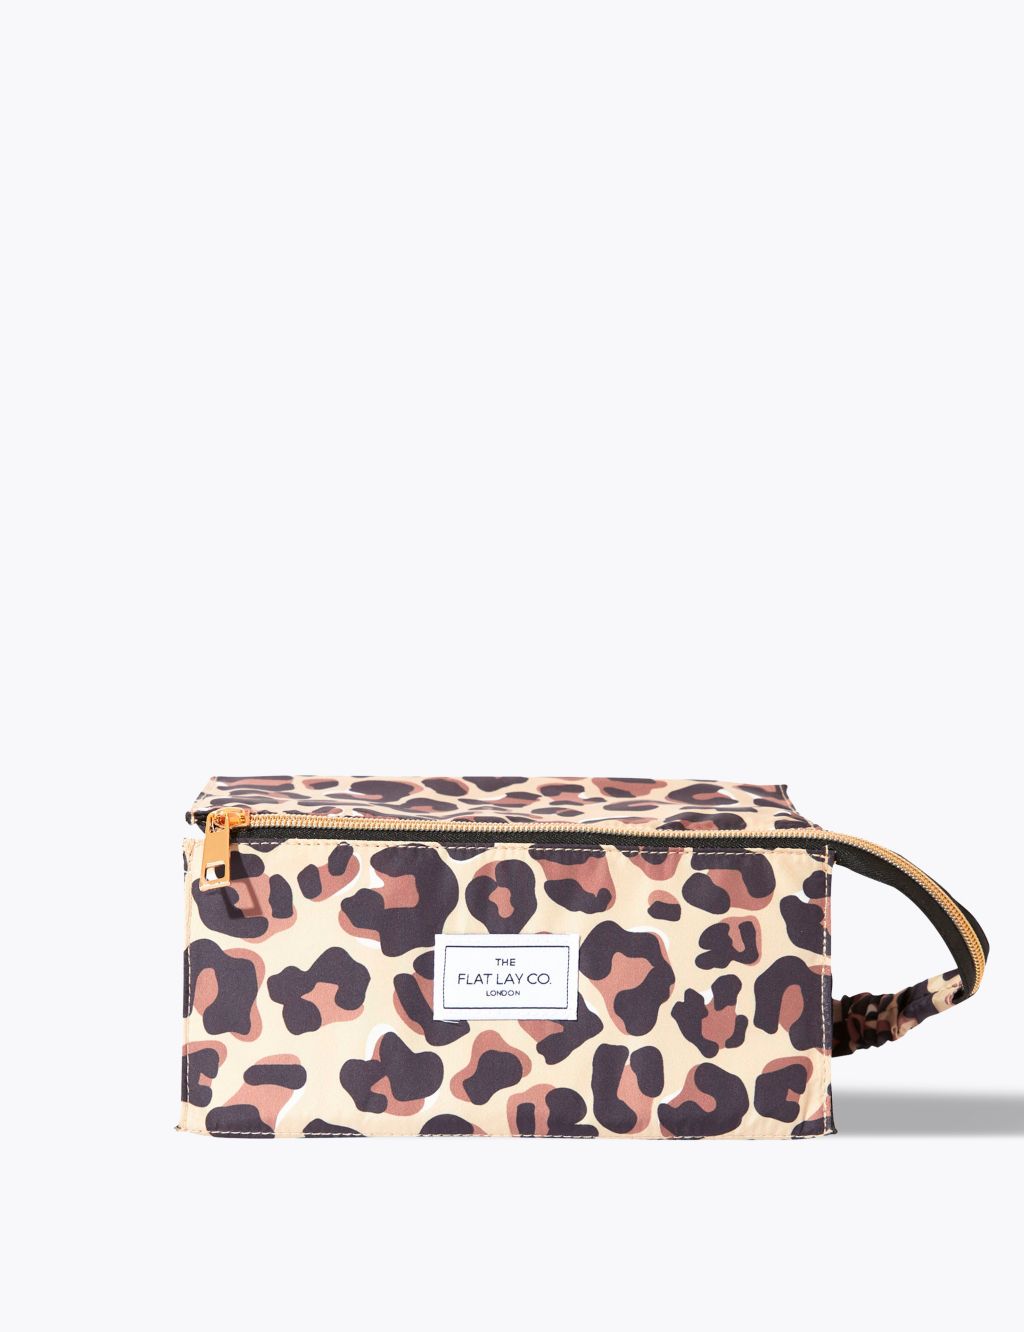 Makeup Box Bag In Leopard Print